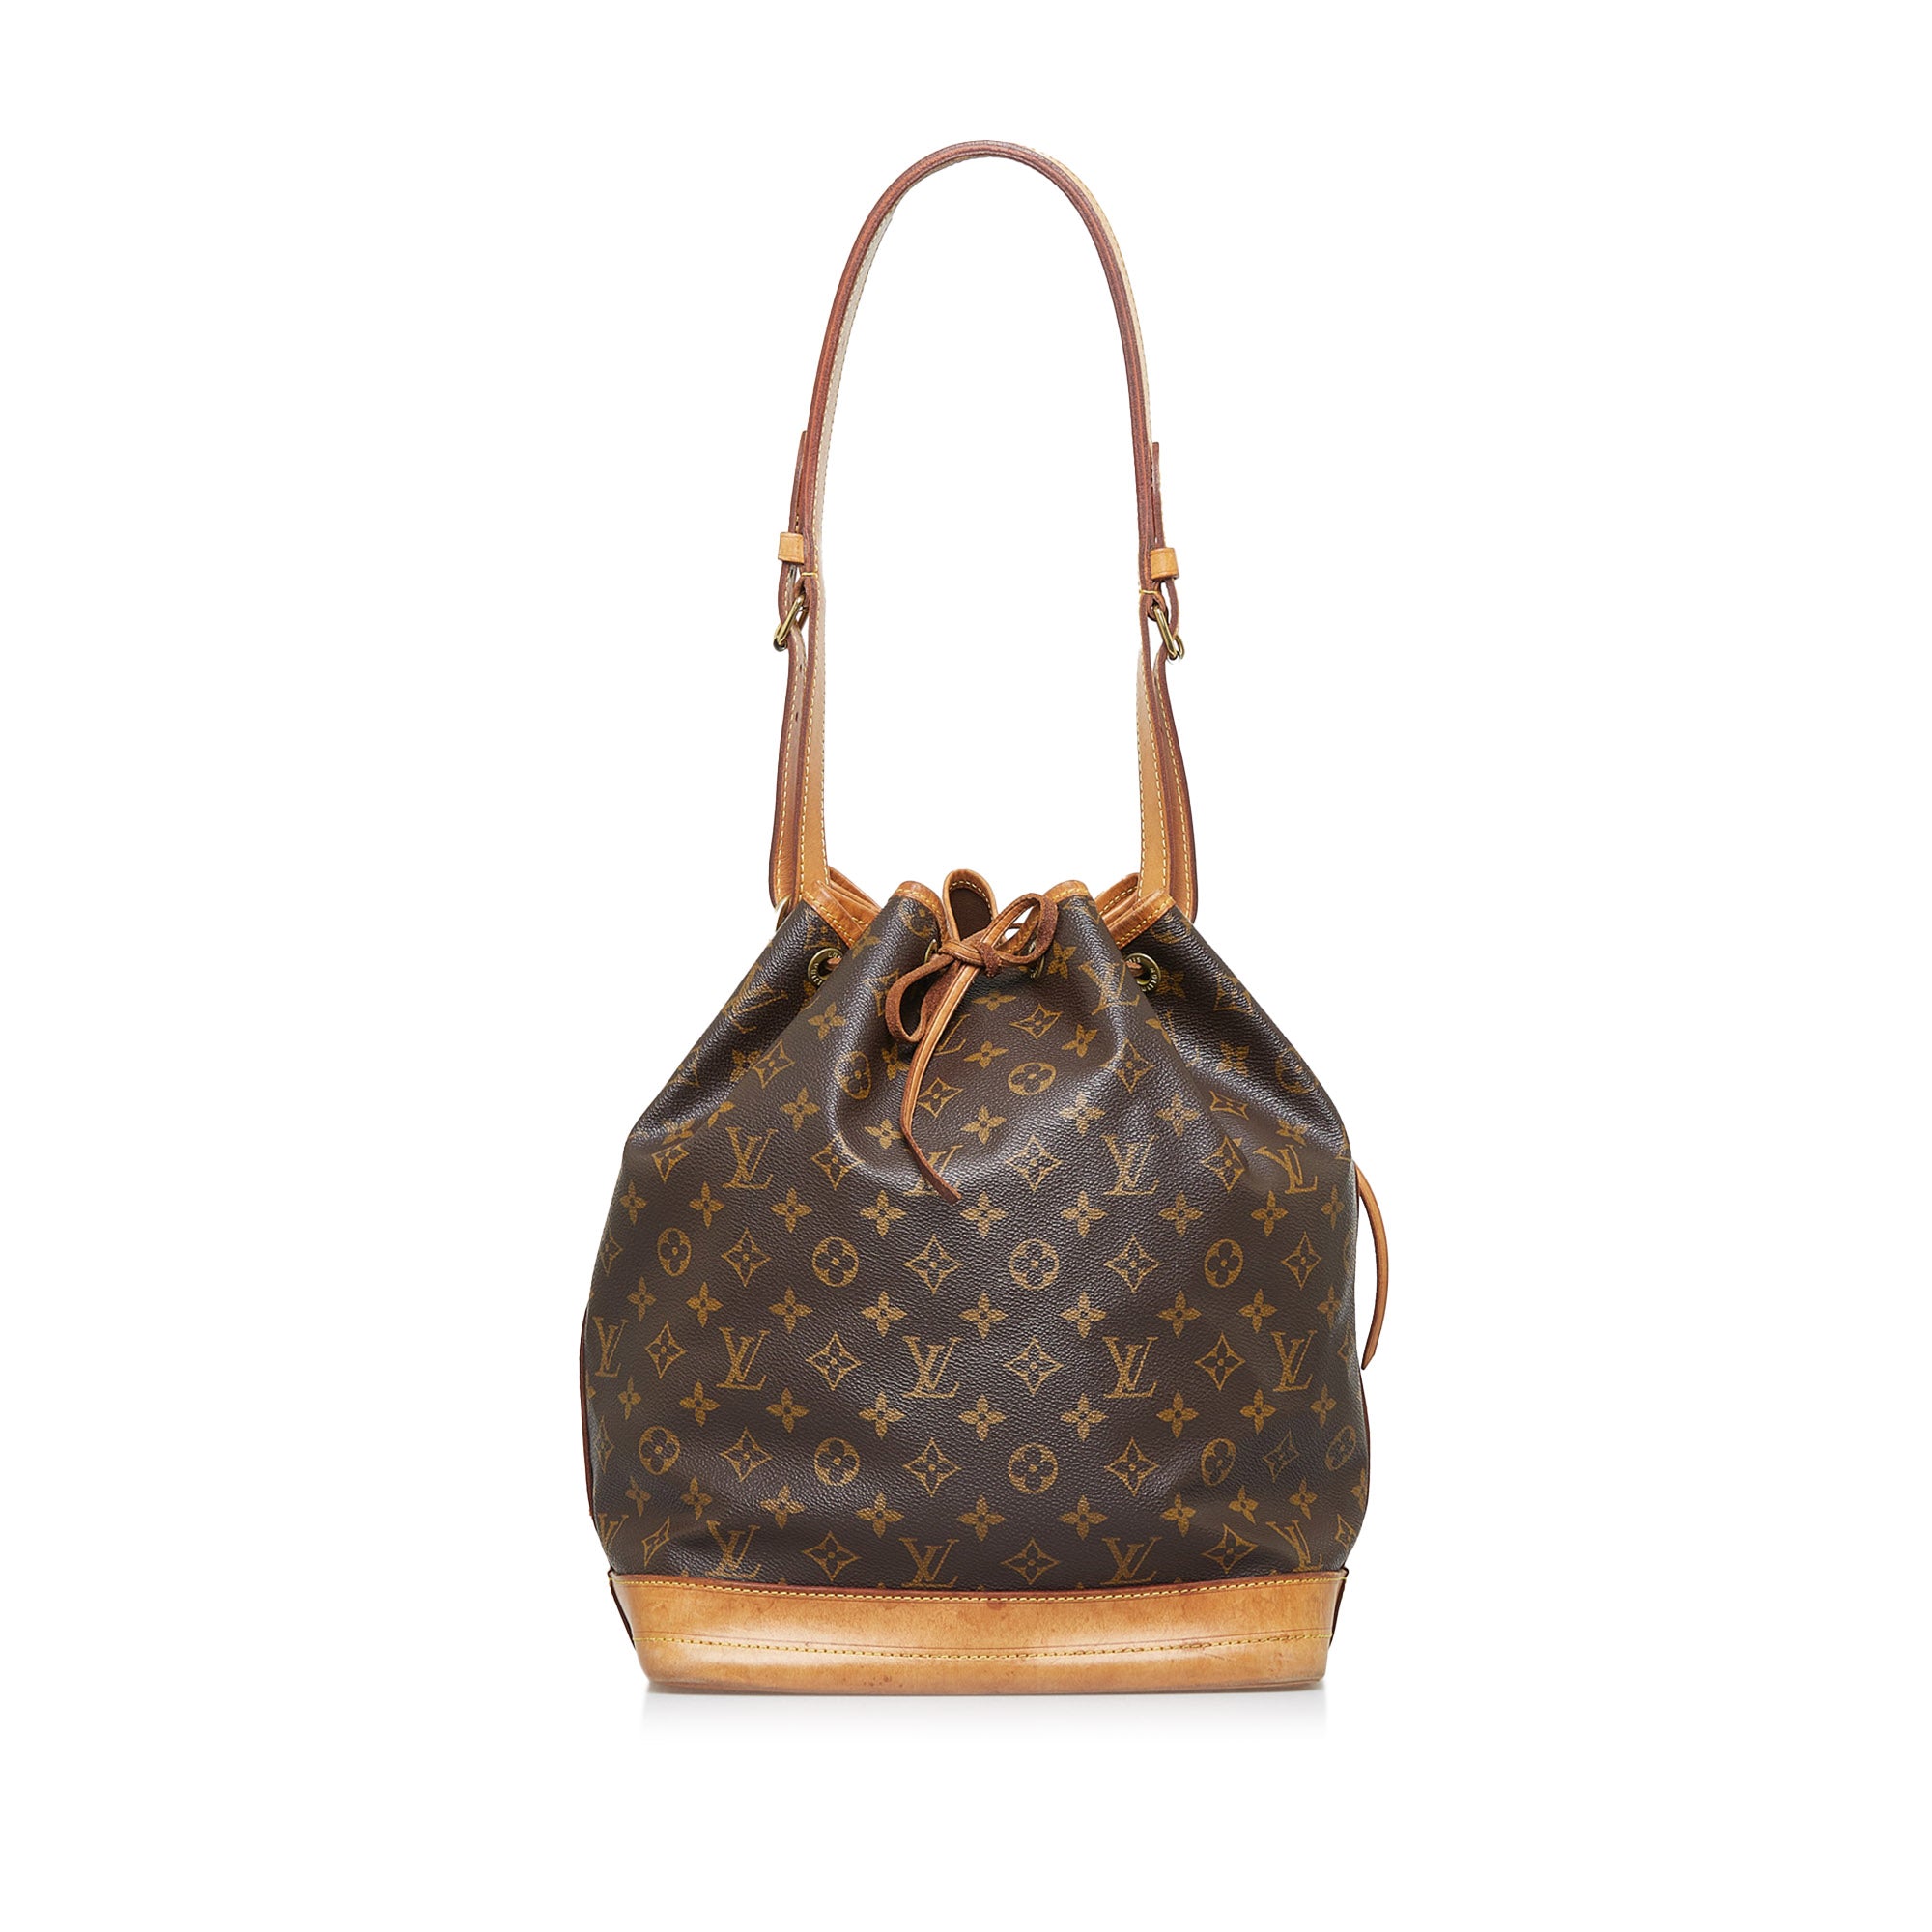 Vintage Louis Vuitton Sac Noe Handbag c1990